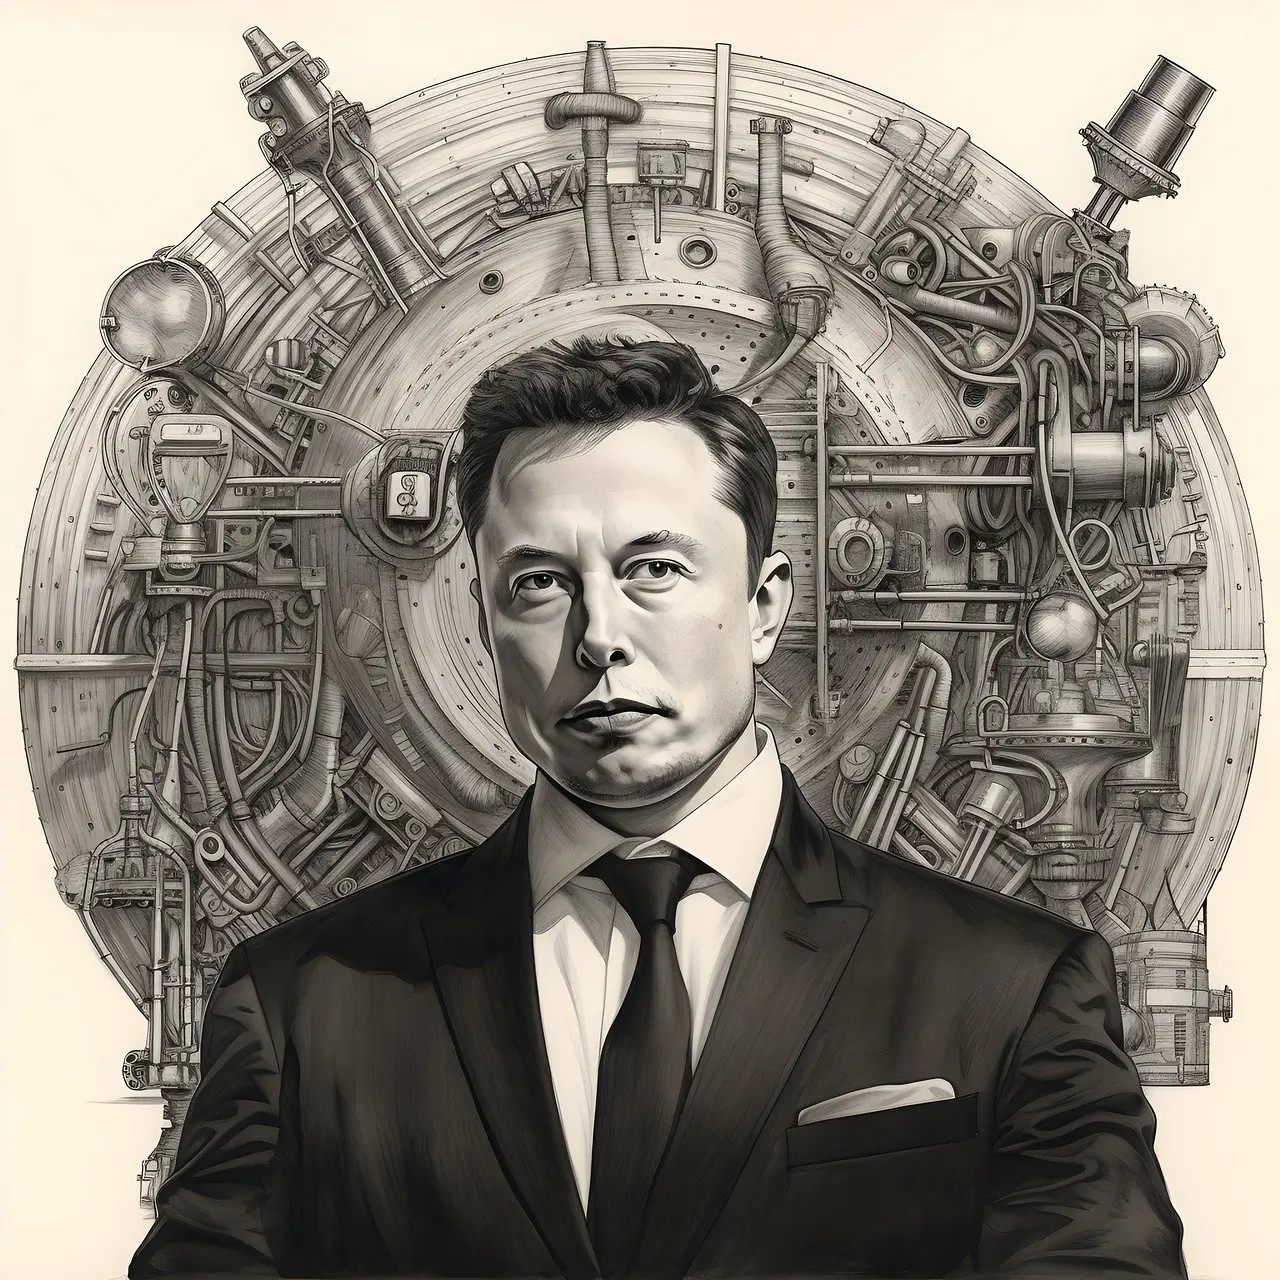 Delaware Judge Strikes Down Elon Musk’s Massive $56 Billion Tesla Pay Deal